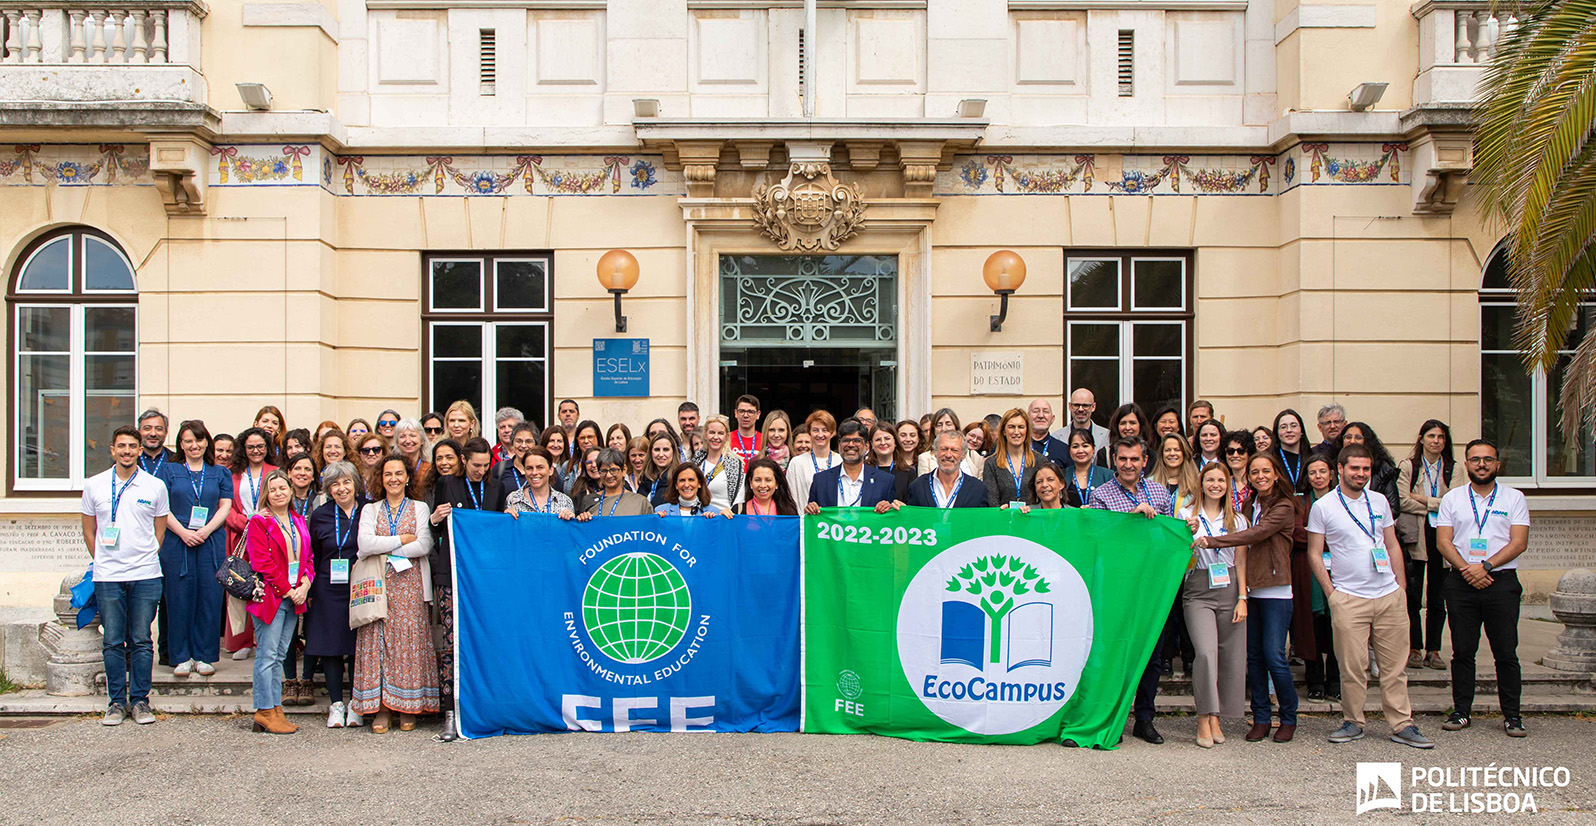 Politécnico de Lisboa realiza conferência internacional